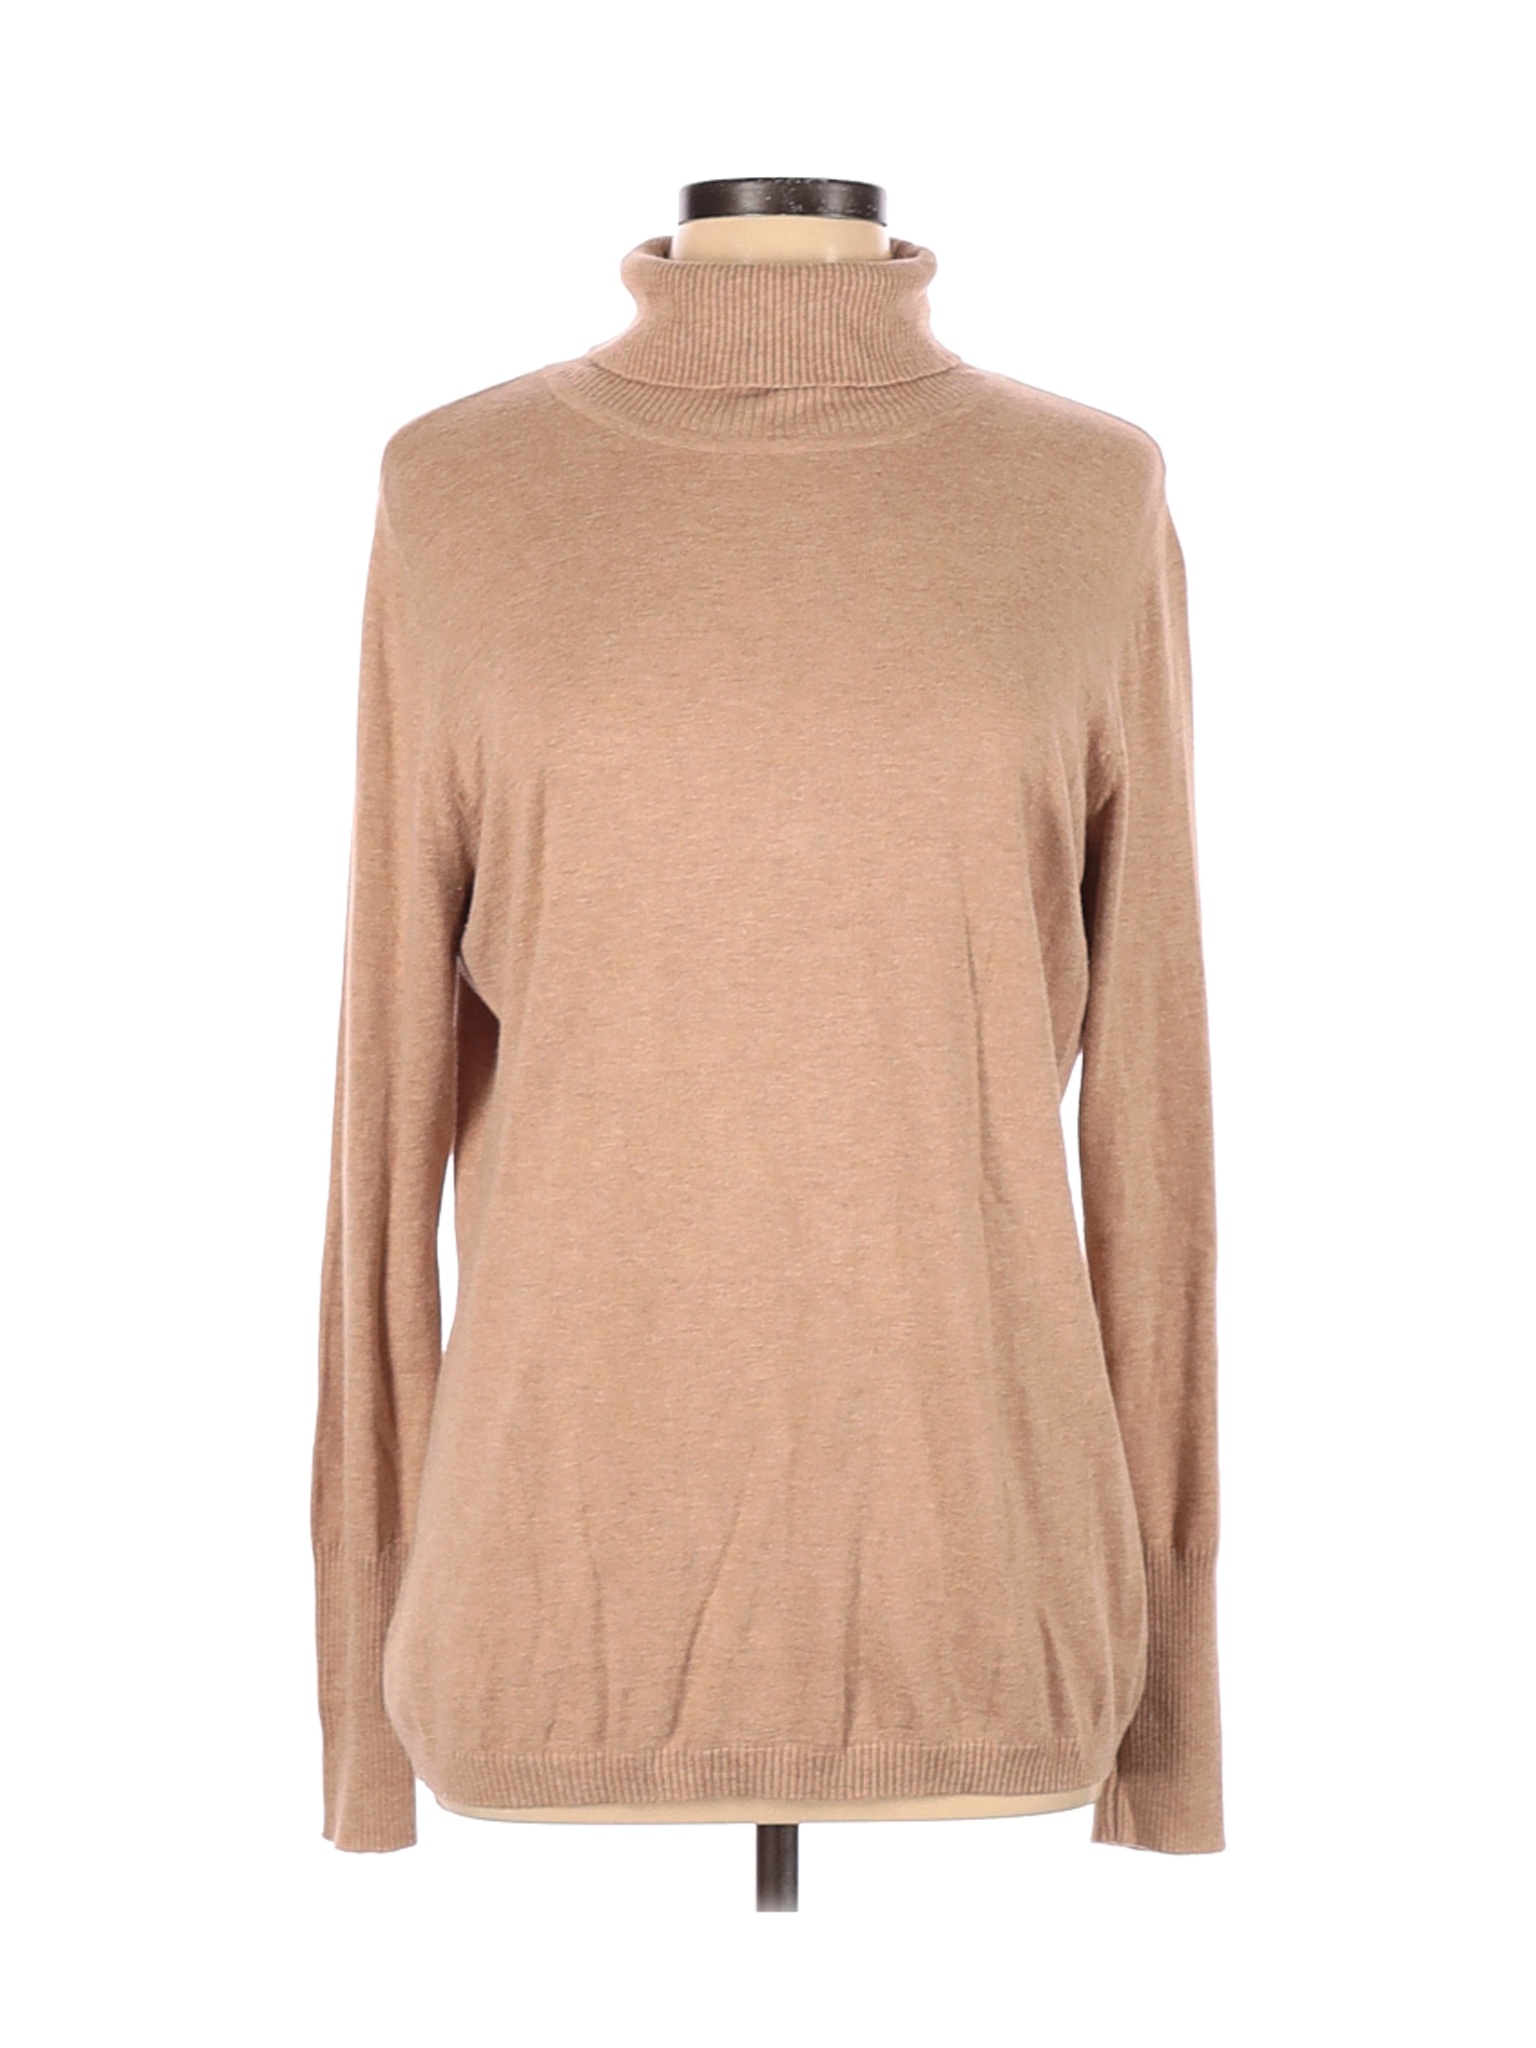 Worthington Women Brown Turtleneck Sweater XL | eBay